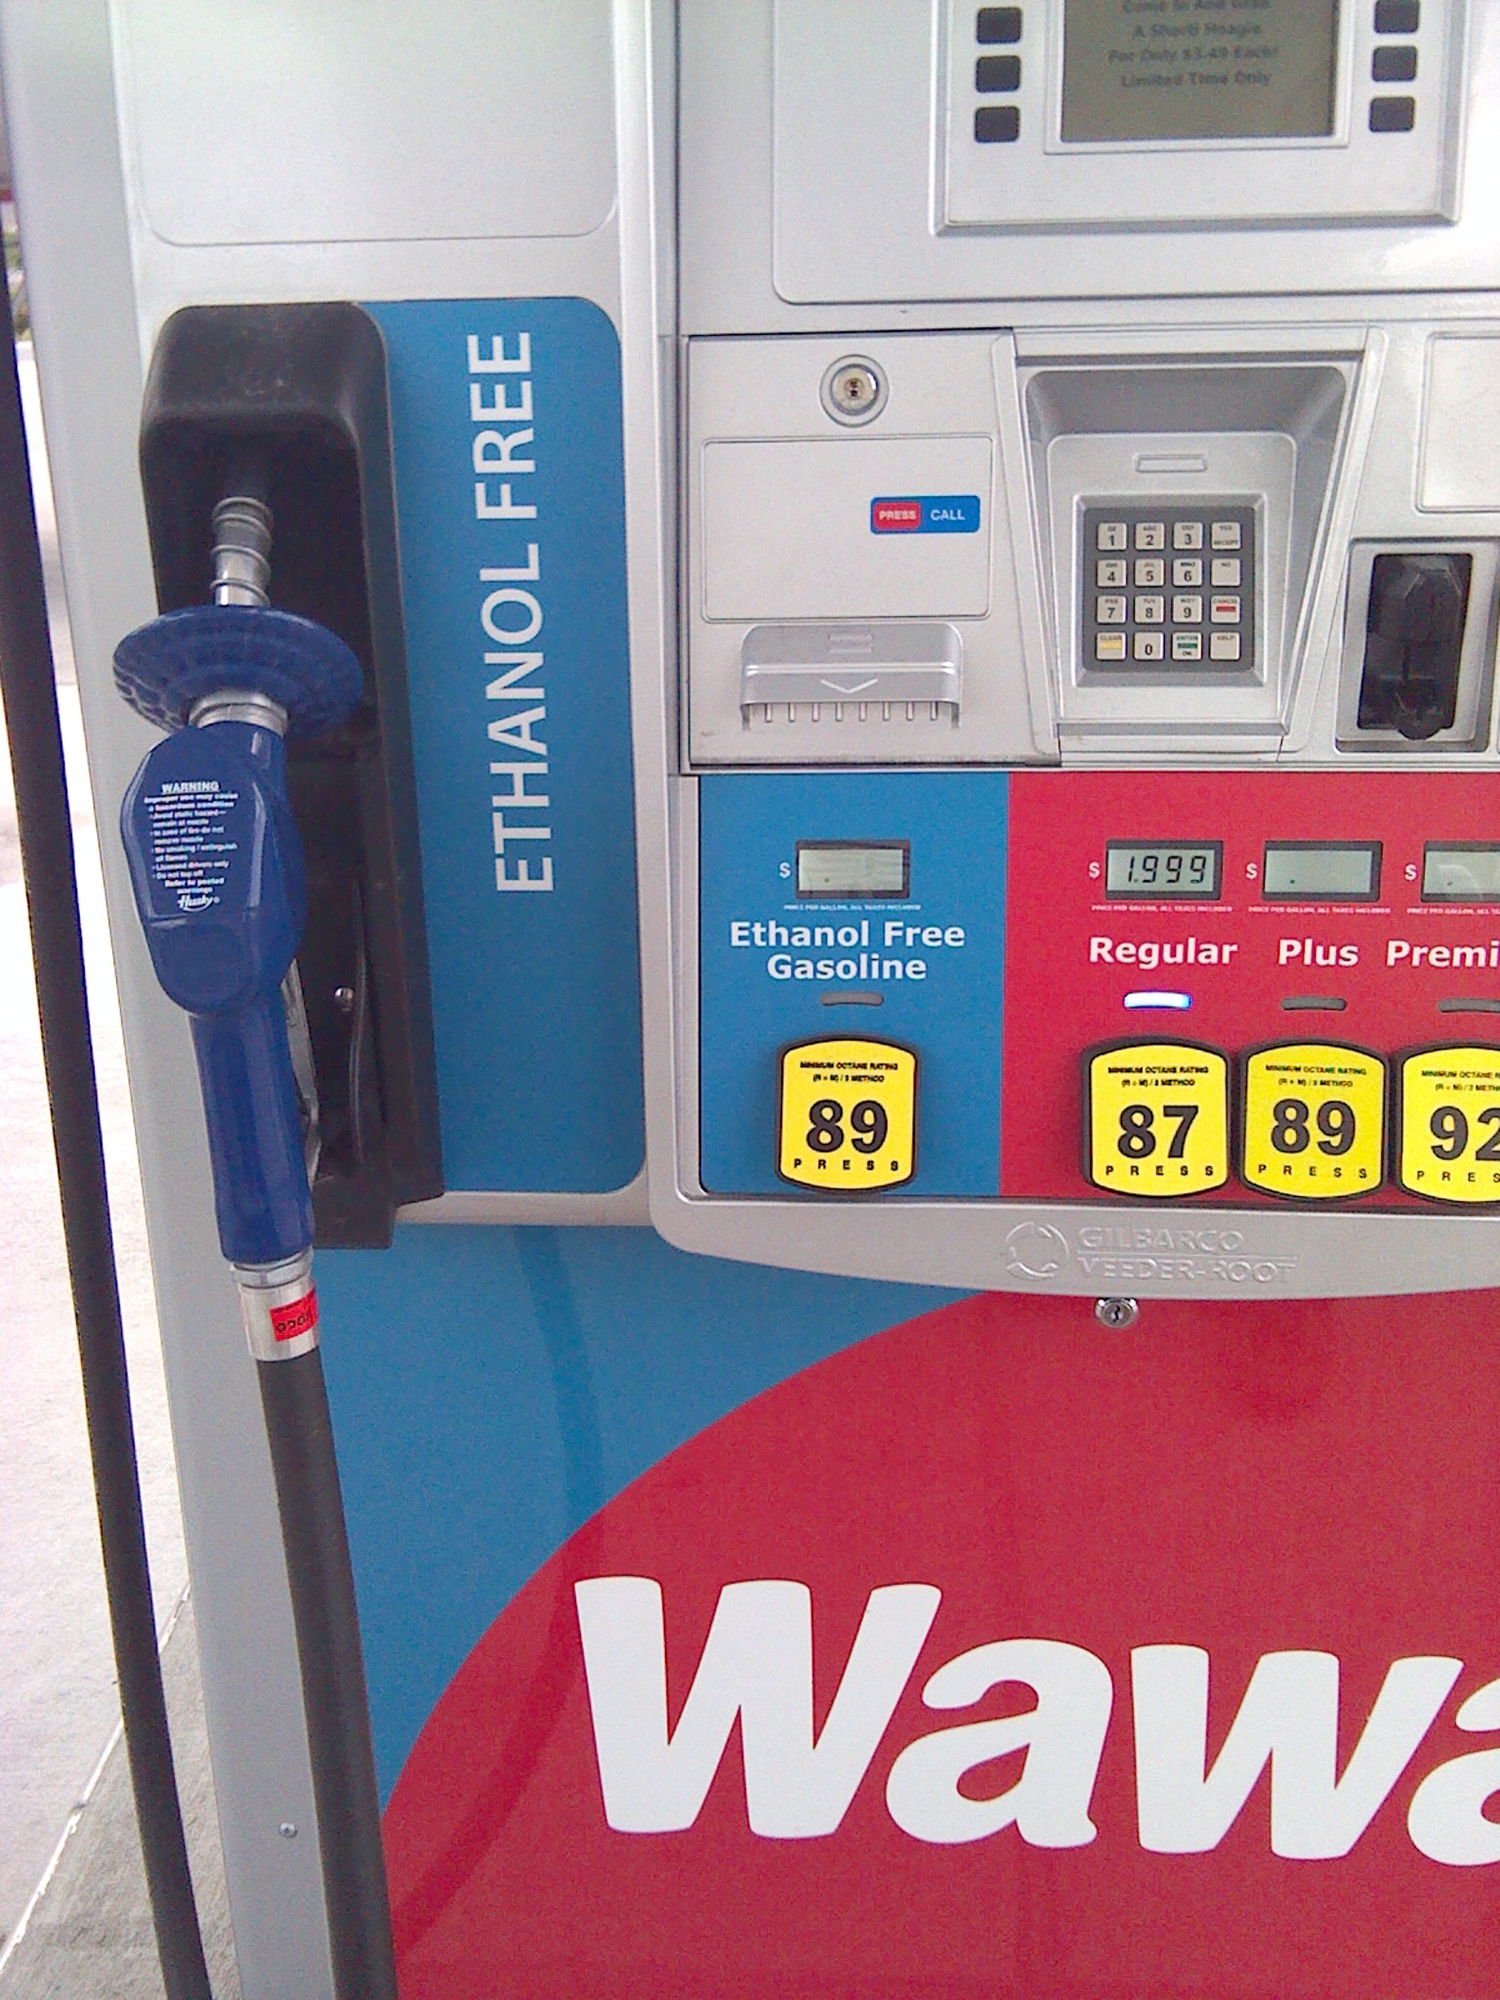 Ethanol free gas? - Page 3 - CorvetteForum - Chevrolet ...